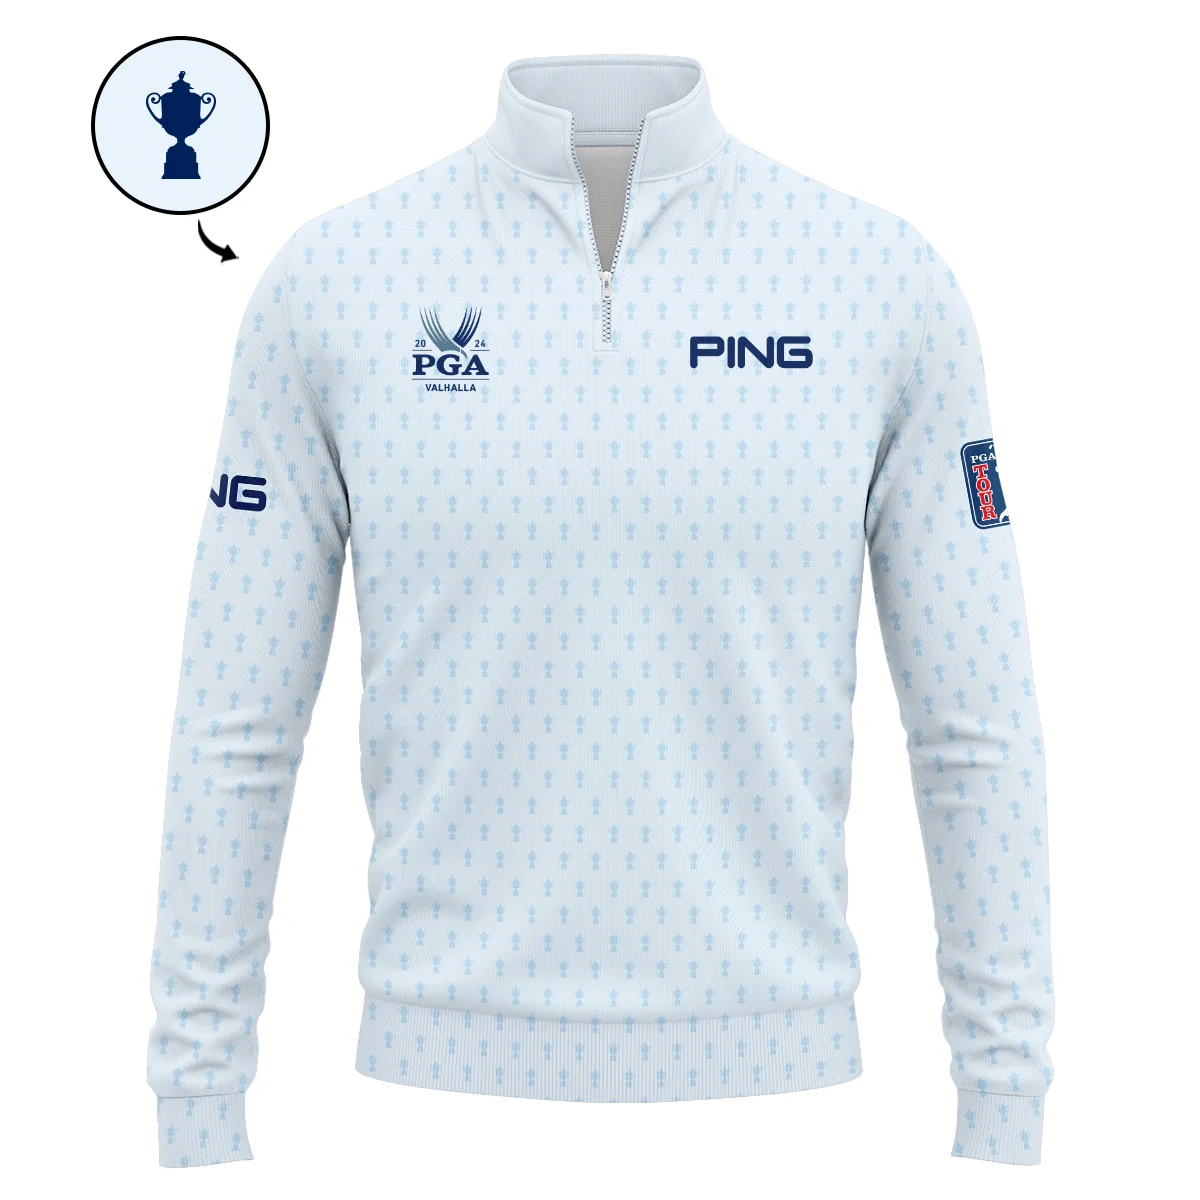 Golf Pattern Cup White Mix Light Blue 2024 PGA Championship Valhalla Ping Unisex Sweatshirt Style Classic Sweatshirt